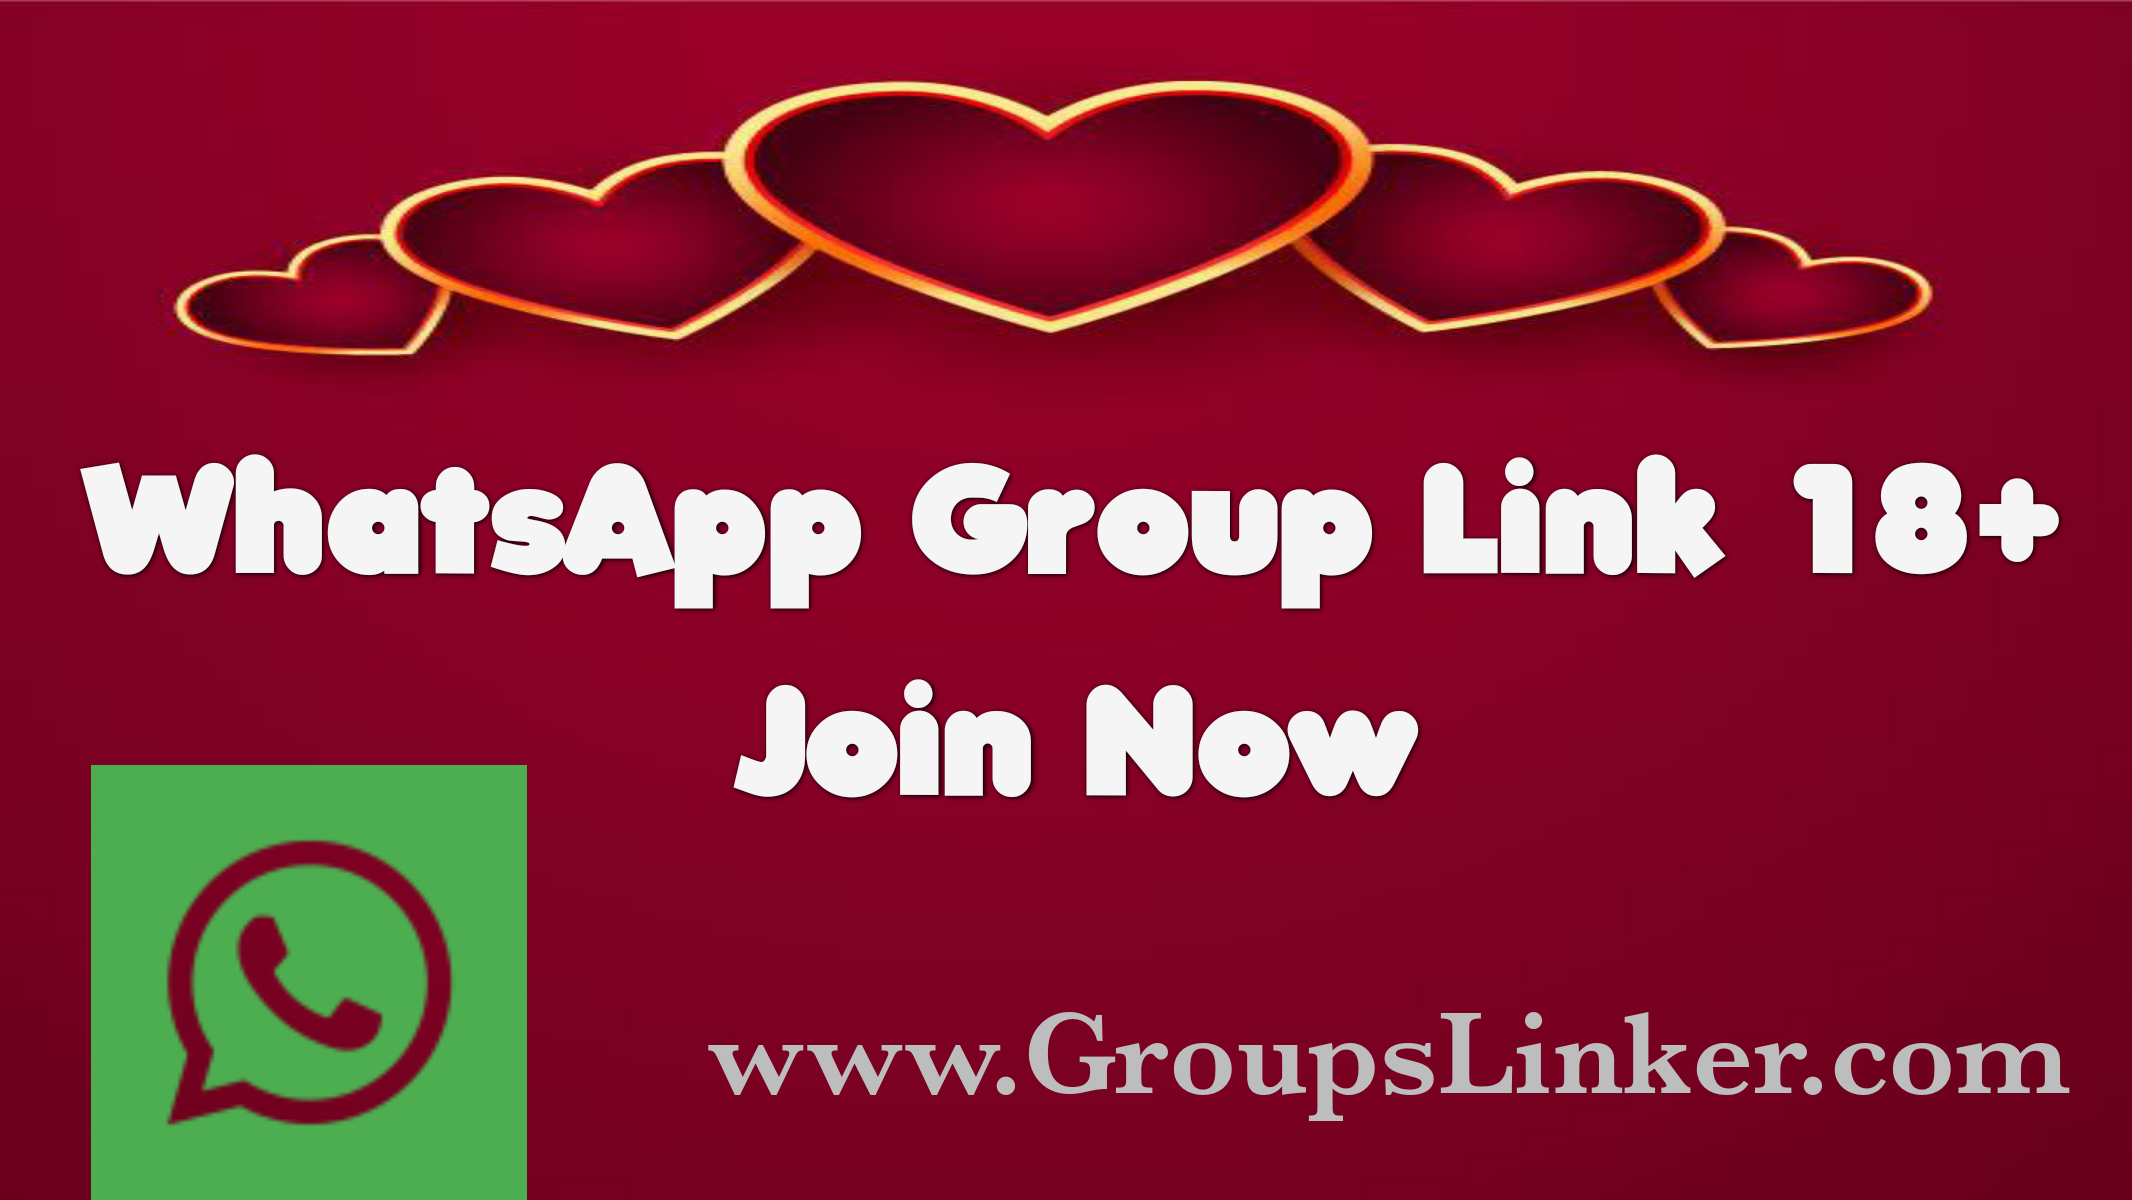 WhatsApp Group Link 18+